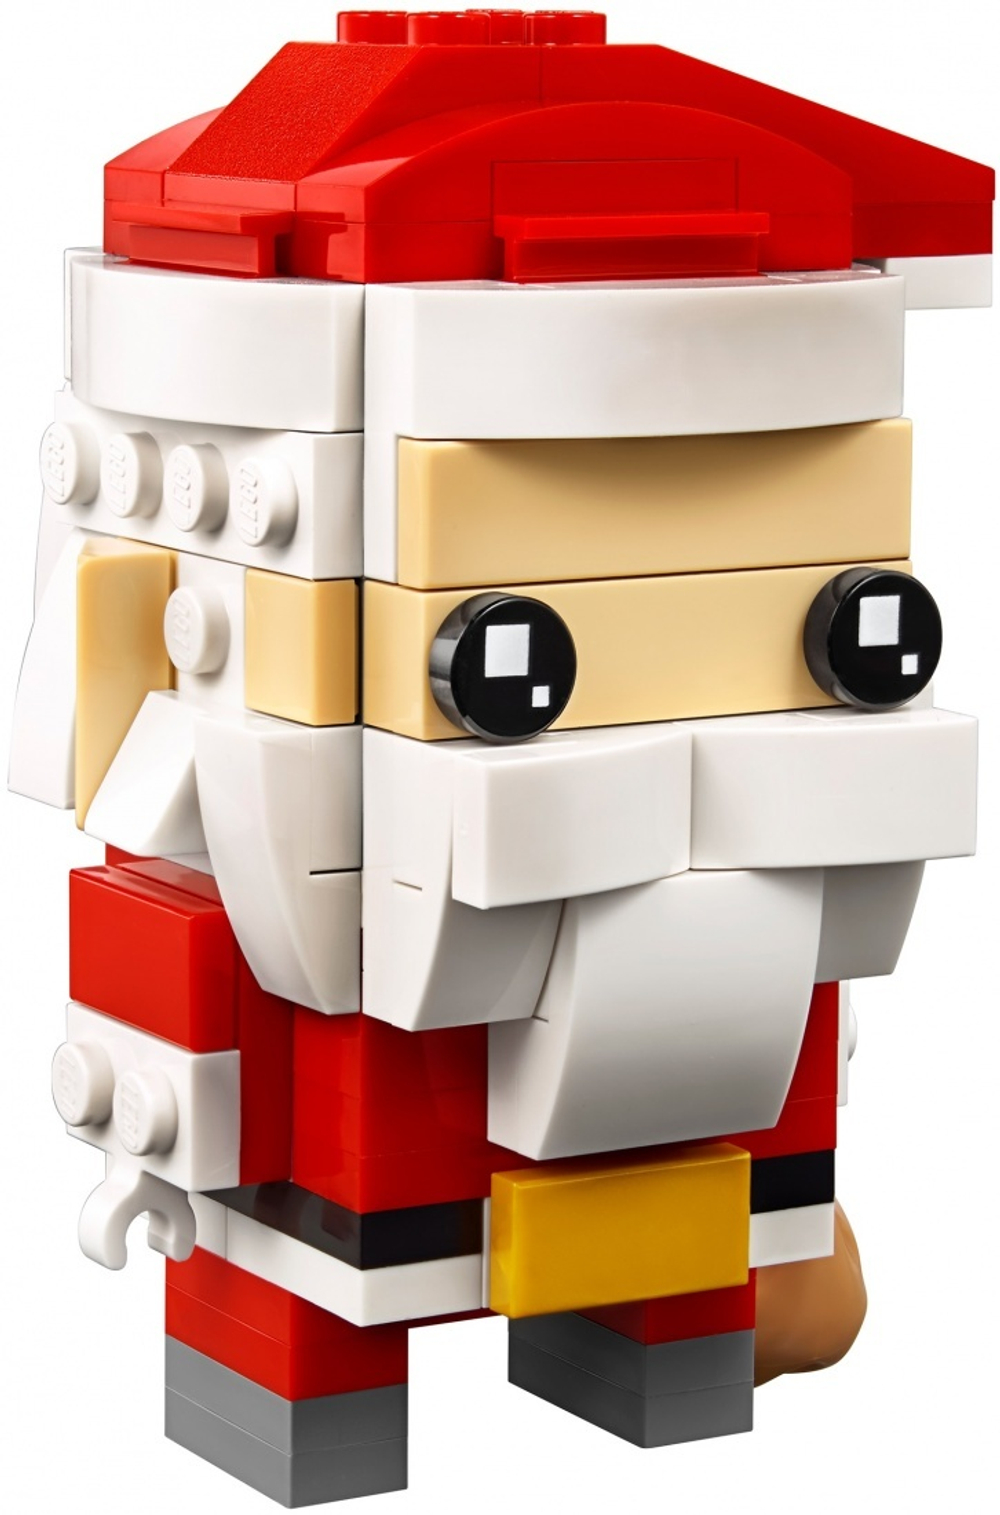 LEGO BrickHeadz: Мистер и Миссис Клаус 40274 — Mr. & Mrs. Claus — Лего БрикХедз